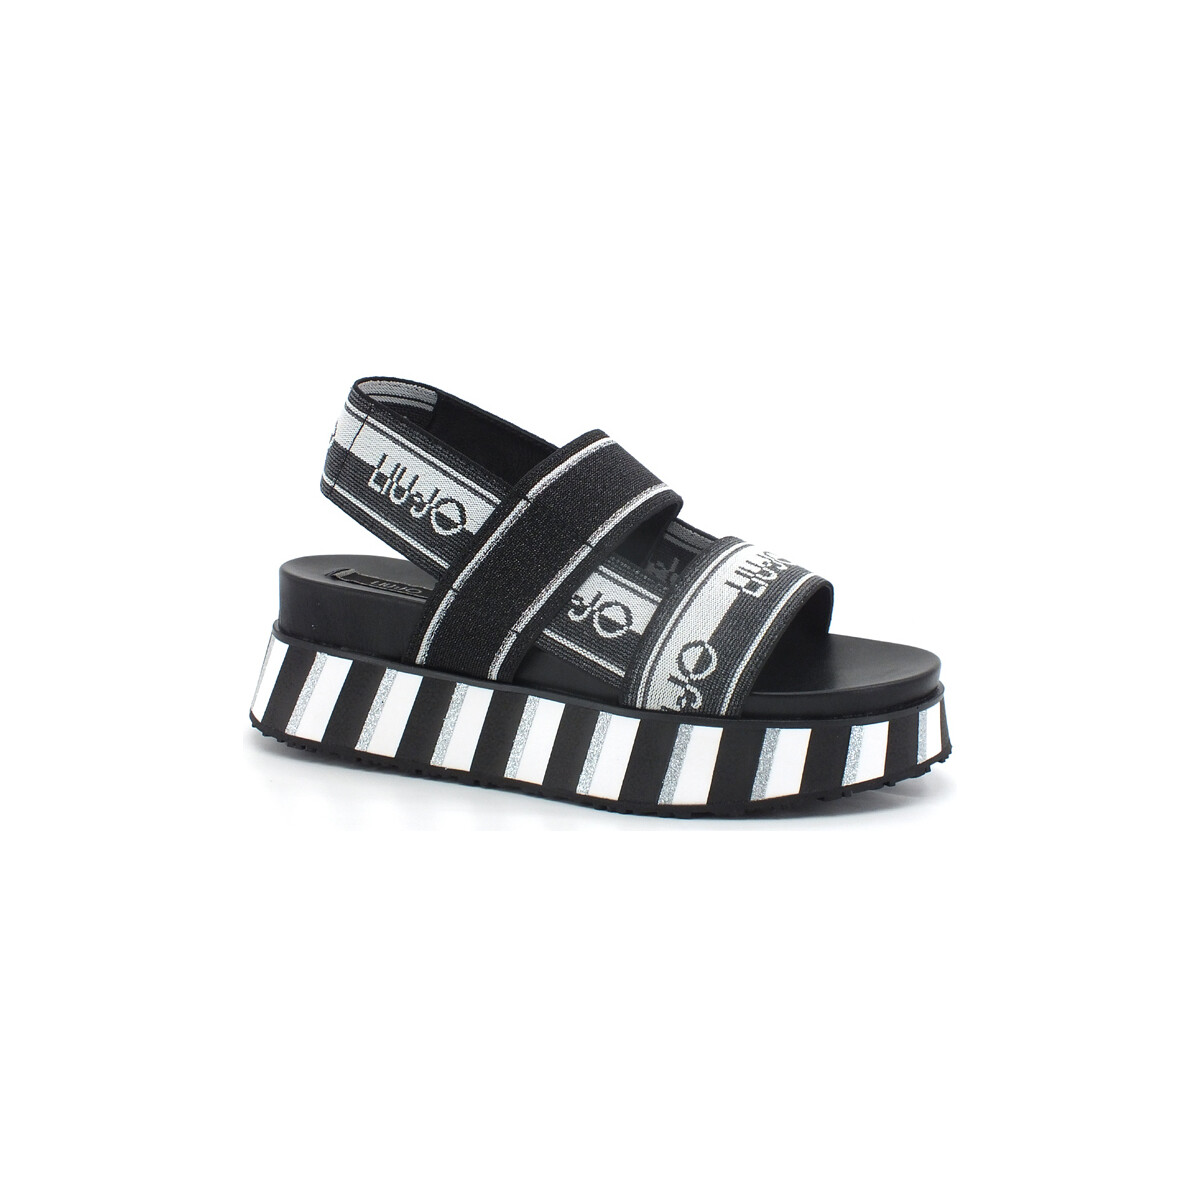 Chaussures Femme Bottes Liu Jo Frida 11 Sandalo Flat Form Zeppa Black SA2163TX022 Noir